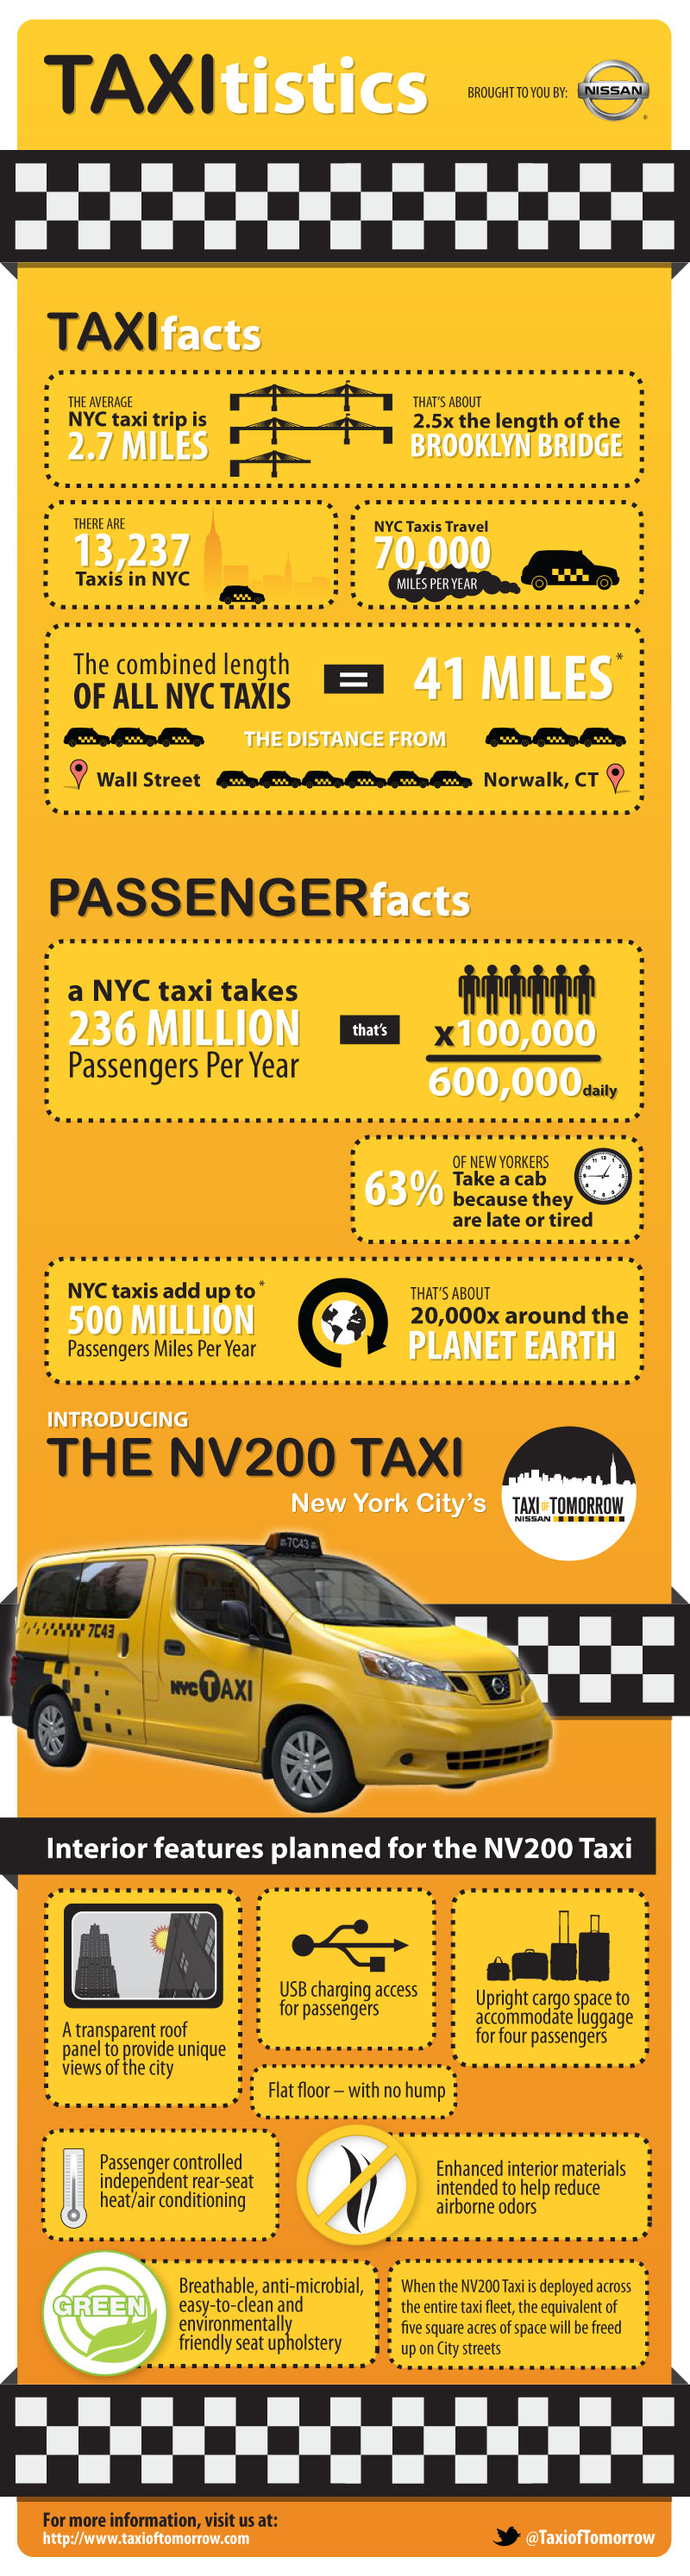 Taxi statistics